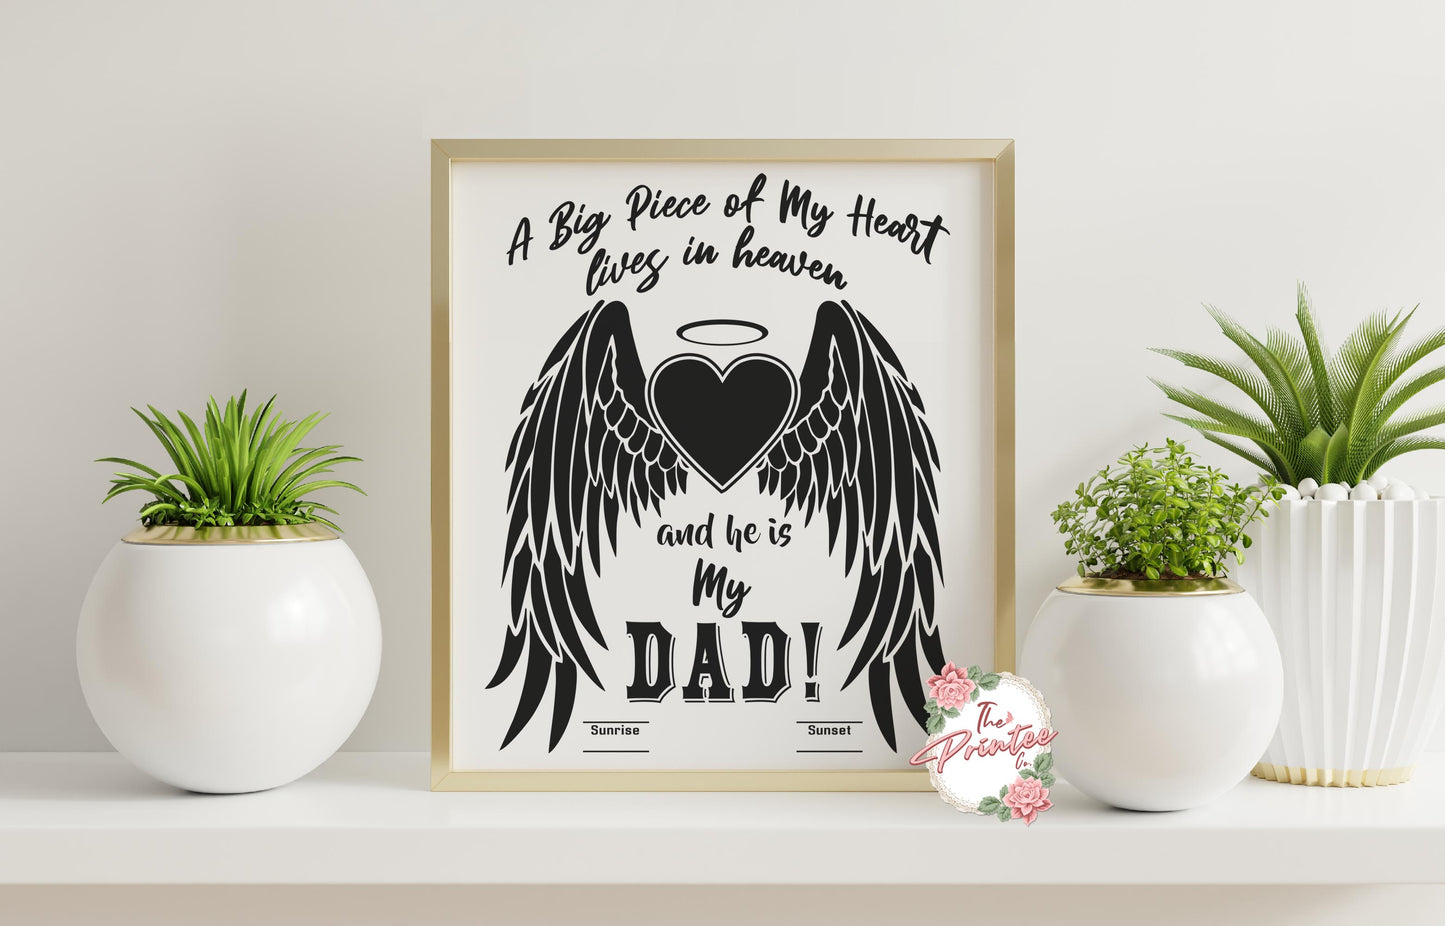 A Big Piece of Heart Dad in Heaven SVG Digital Download